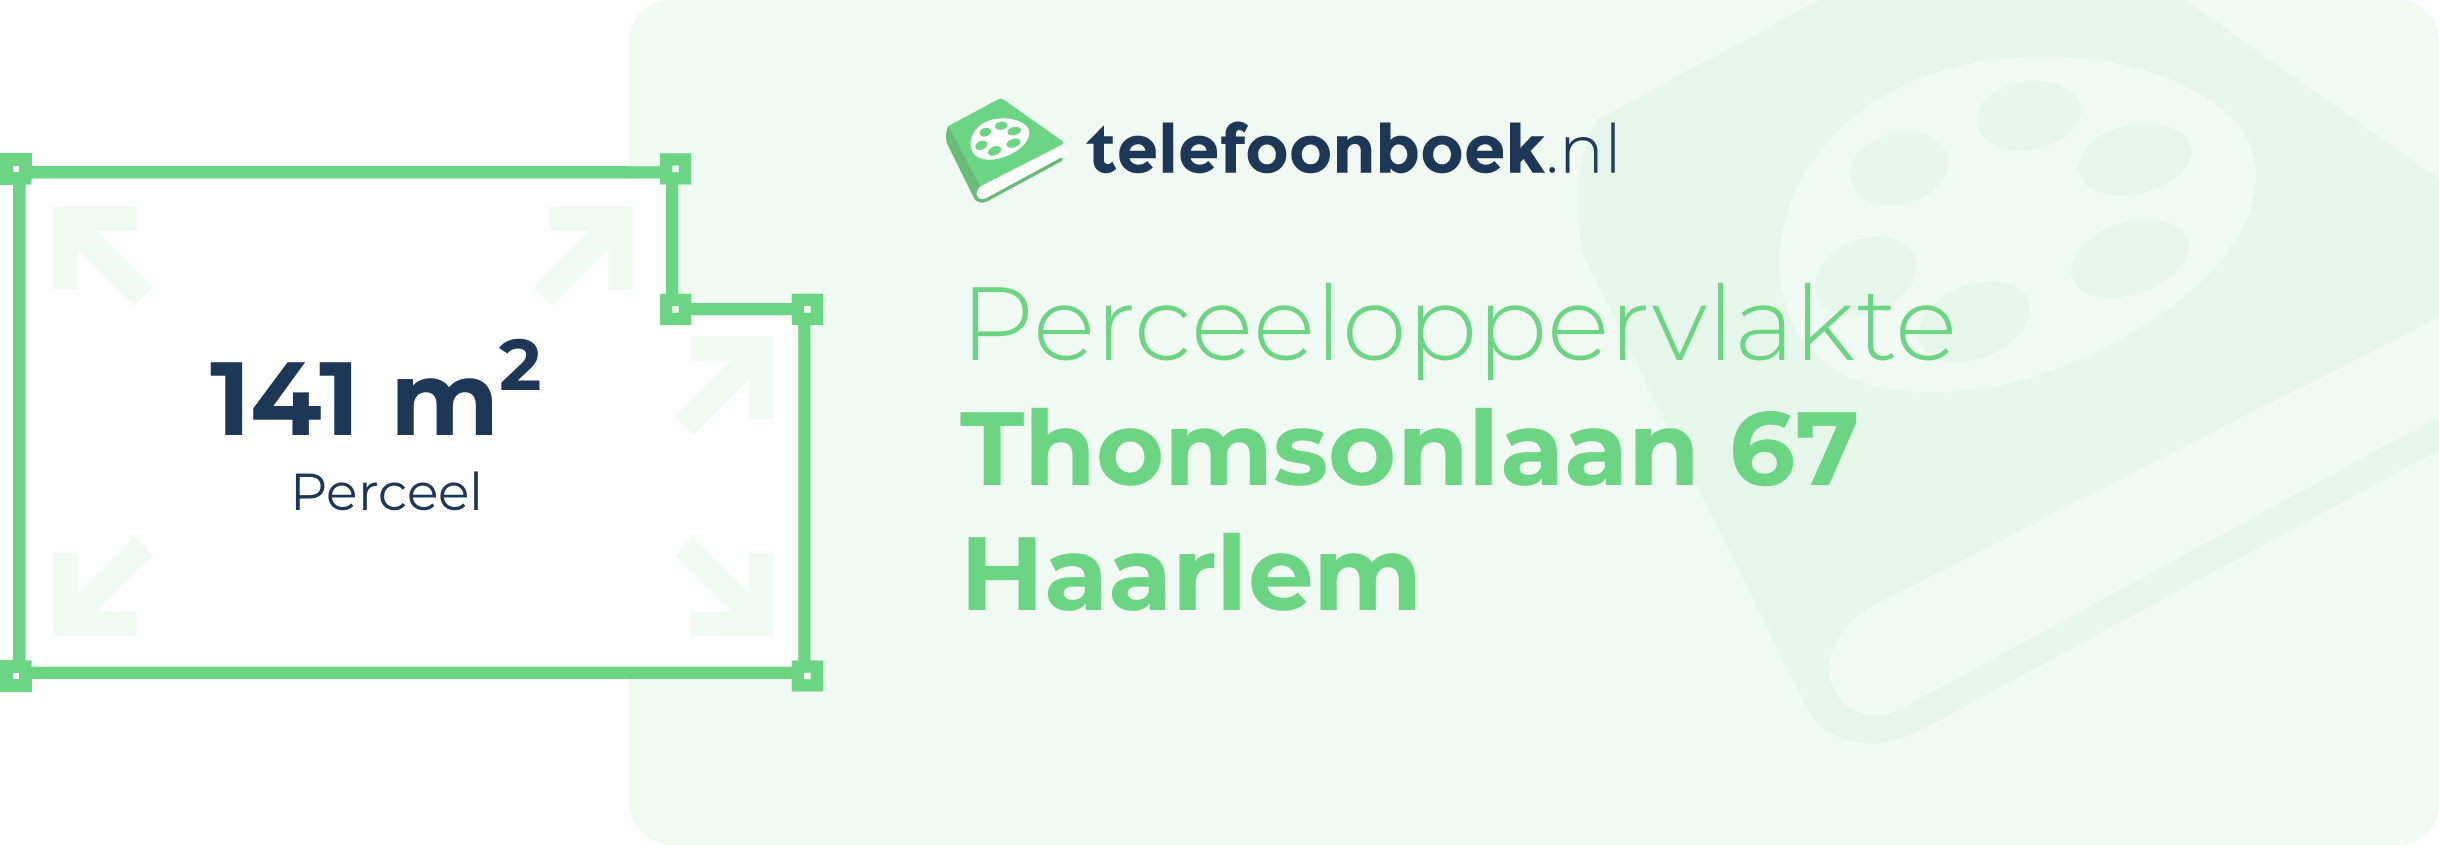 Perceeloppervlakte Thomsonlaan 67 Haarlem